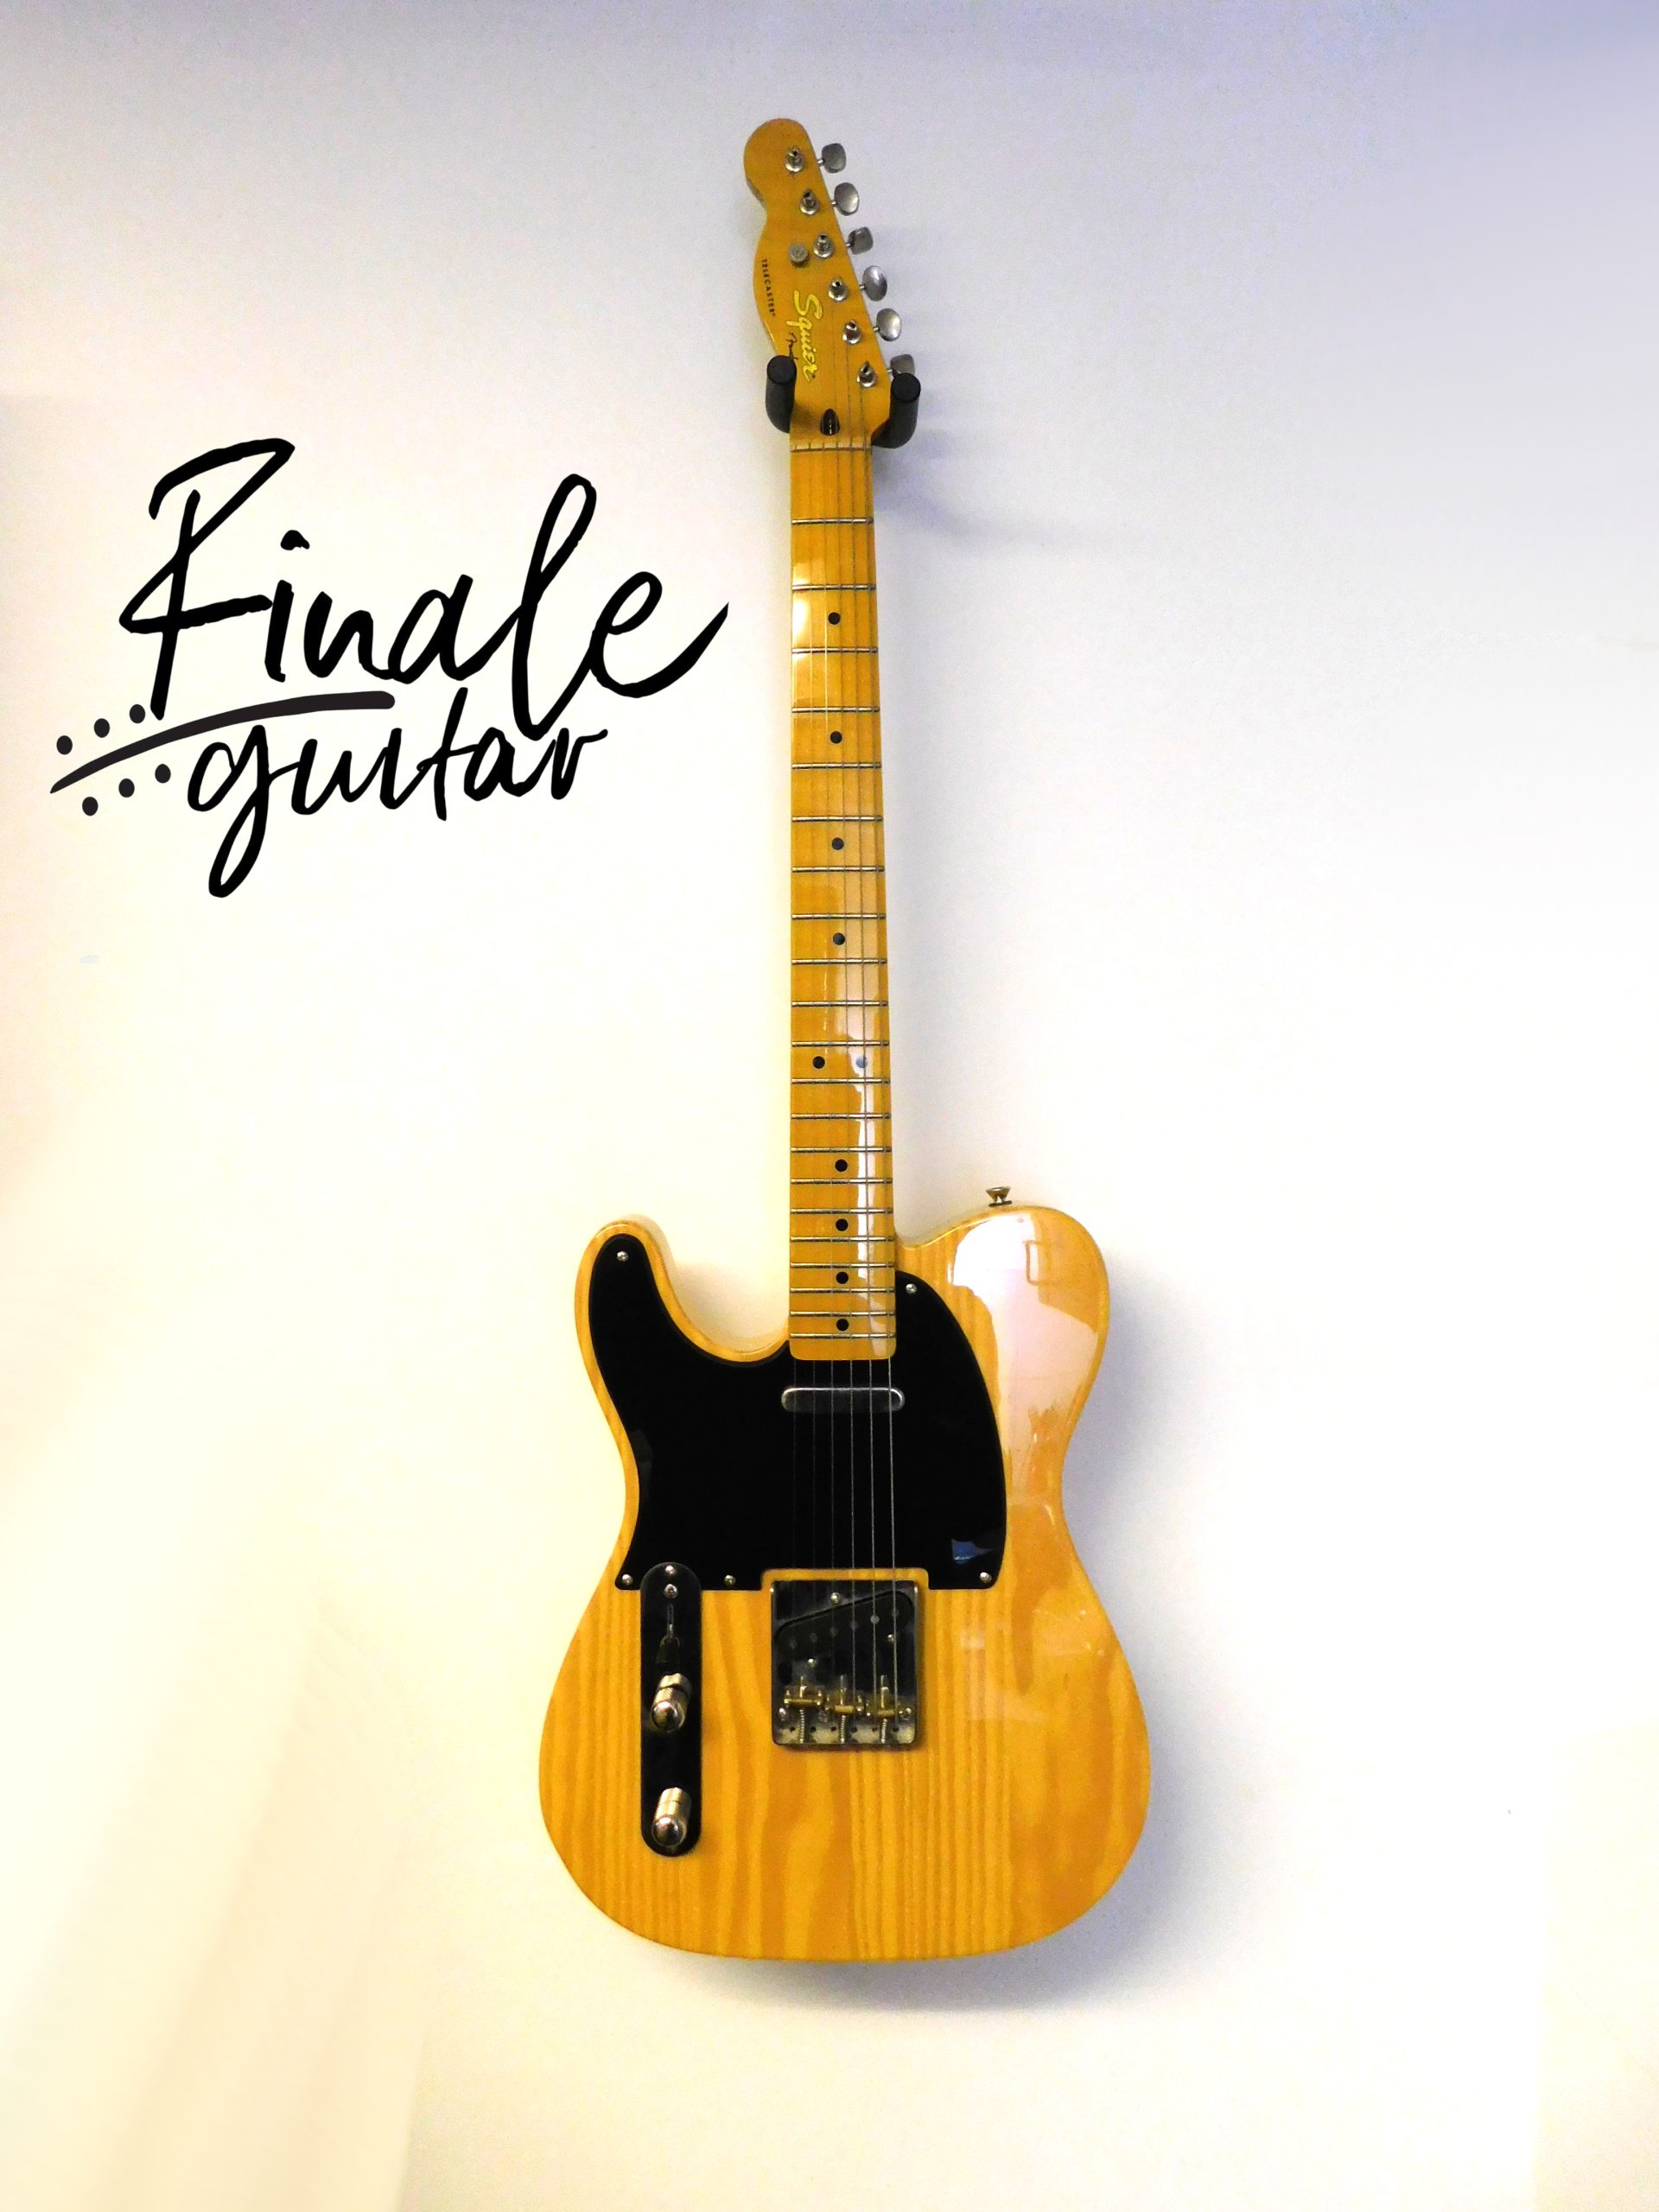 Squier Classic Vibe LH 50s Tele (butterscotch) for sale in our Sheffield guitar shop, Finale Guitar